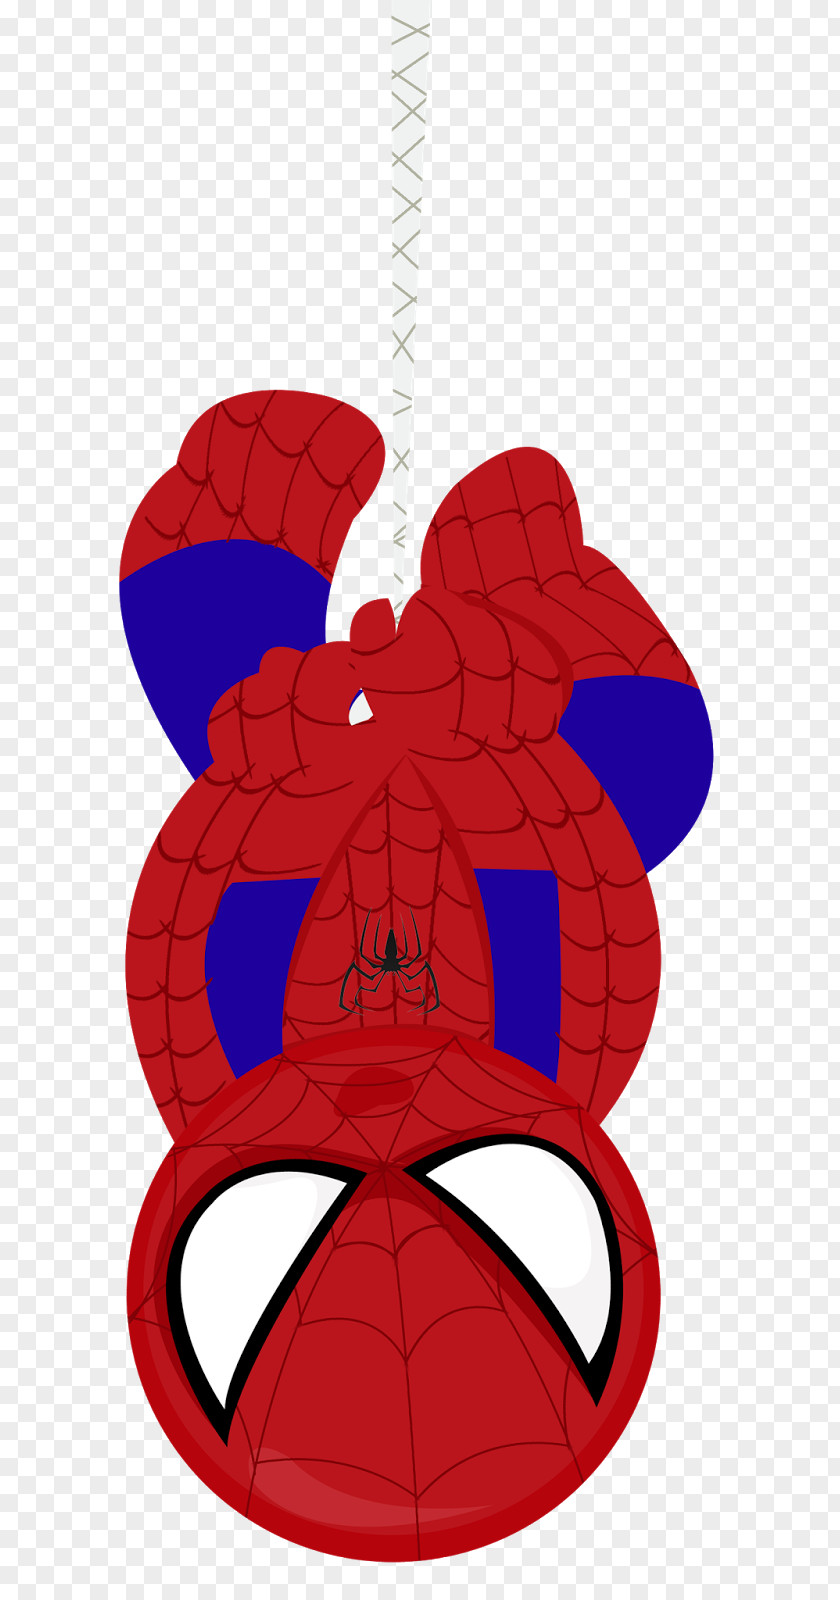 Iron Spiderman Spider-Man Wolverine Deadpool Superhero Clip Art PNG